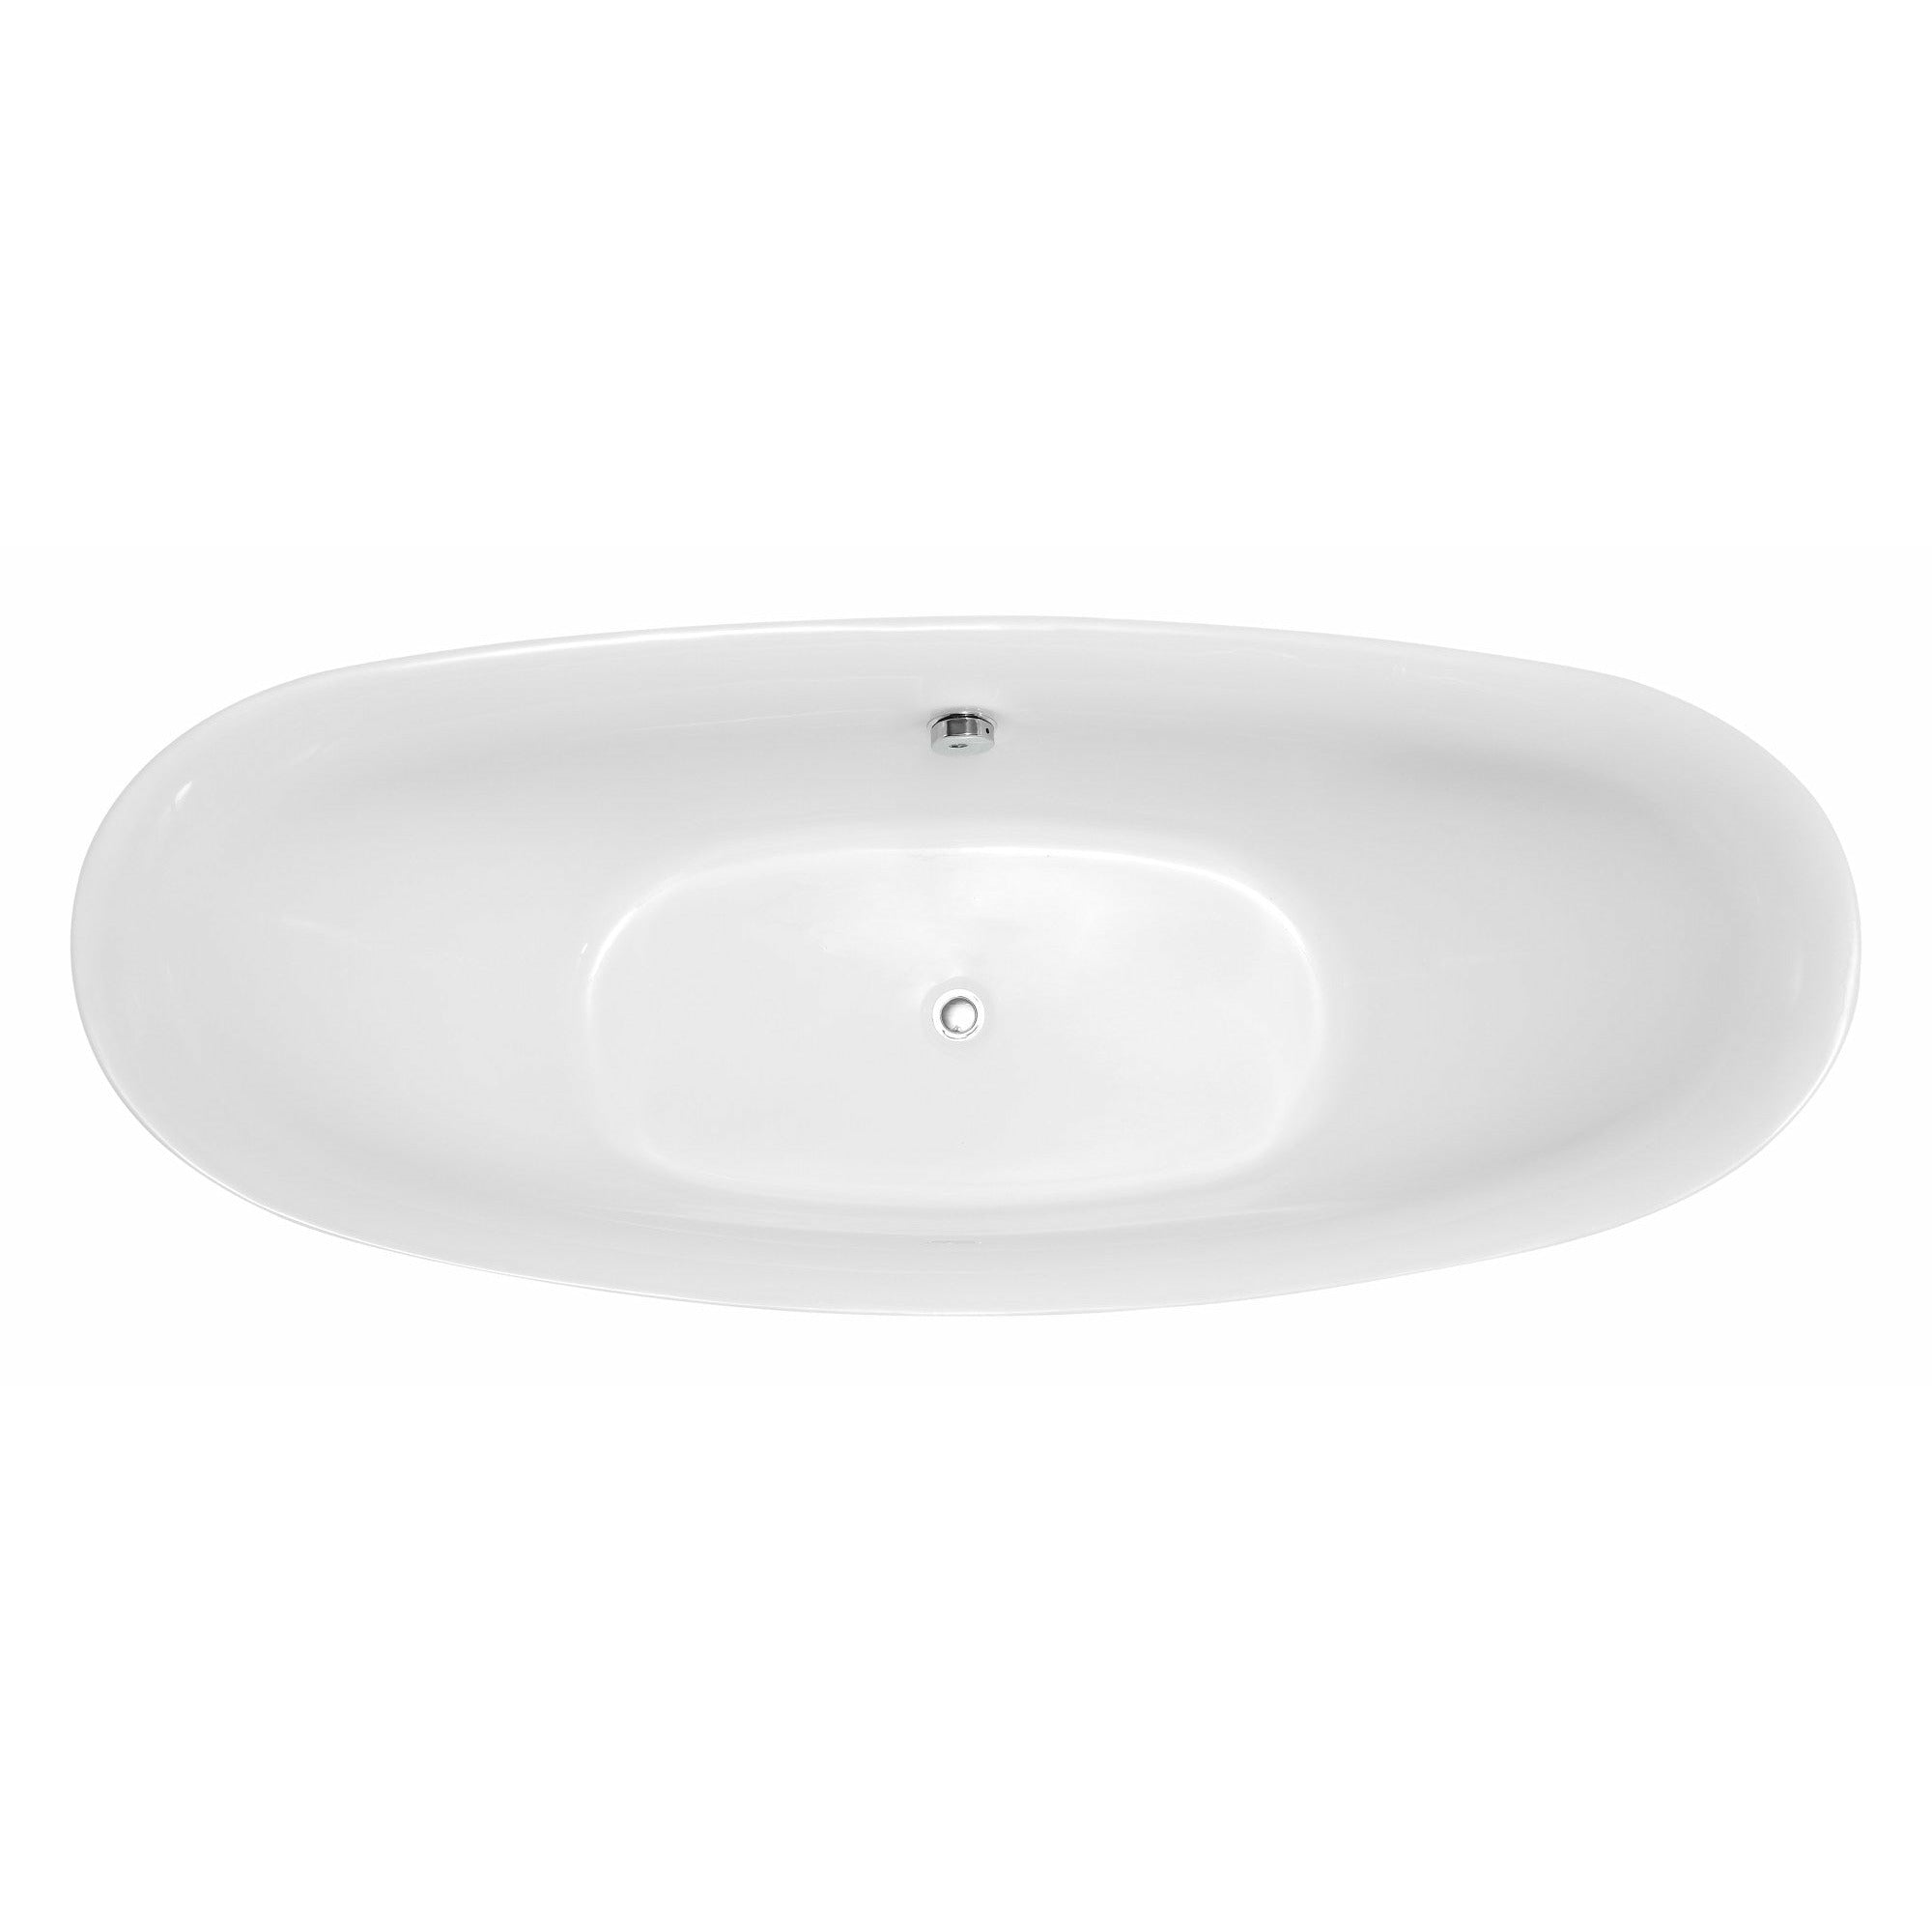 Anzzi Reginald Series 5.67 ft. Freestanding Soaking Bathtub in Acrylic High Gloss White FT-AZ091 - Vital Hydrotherapy